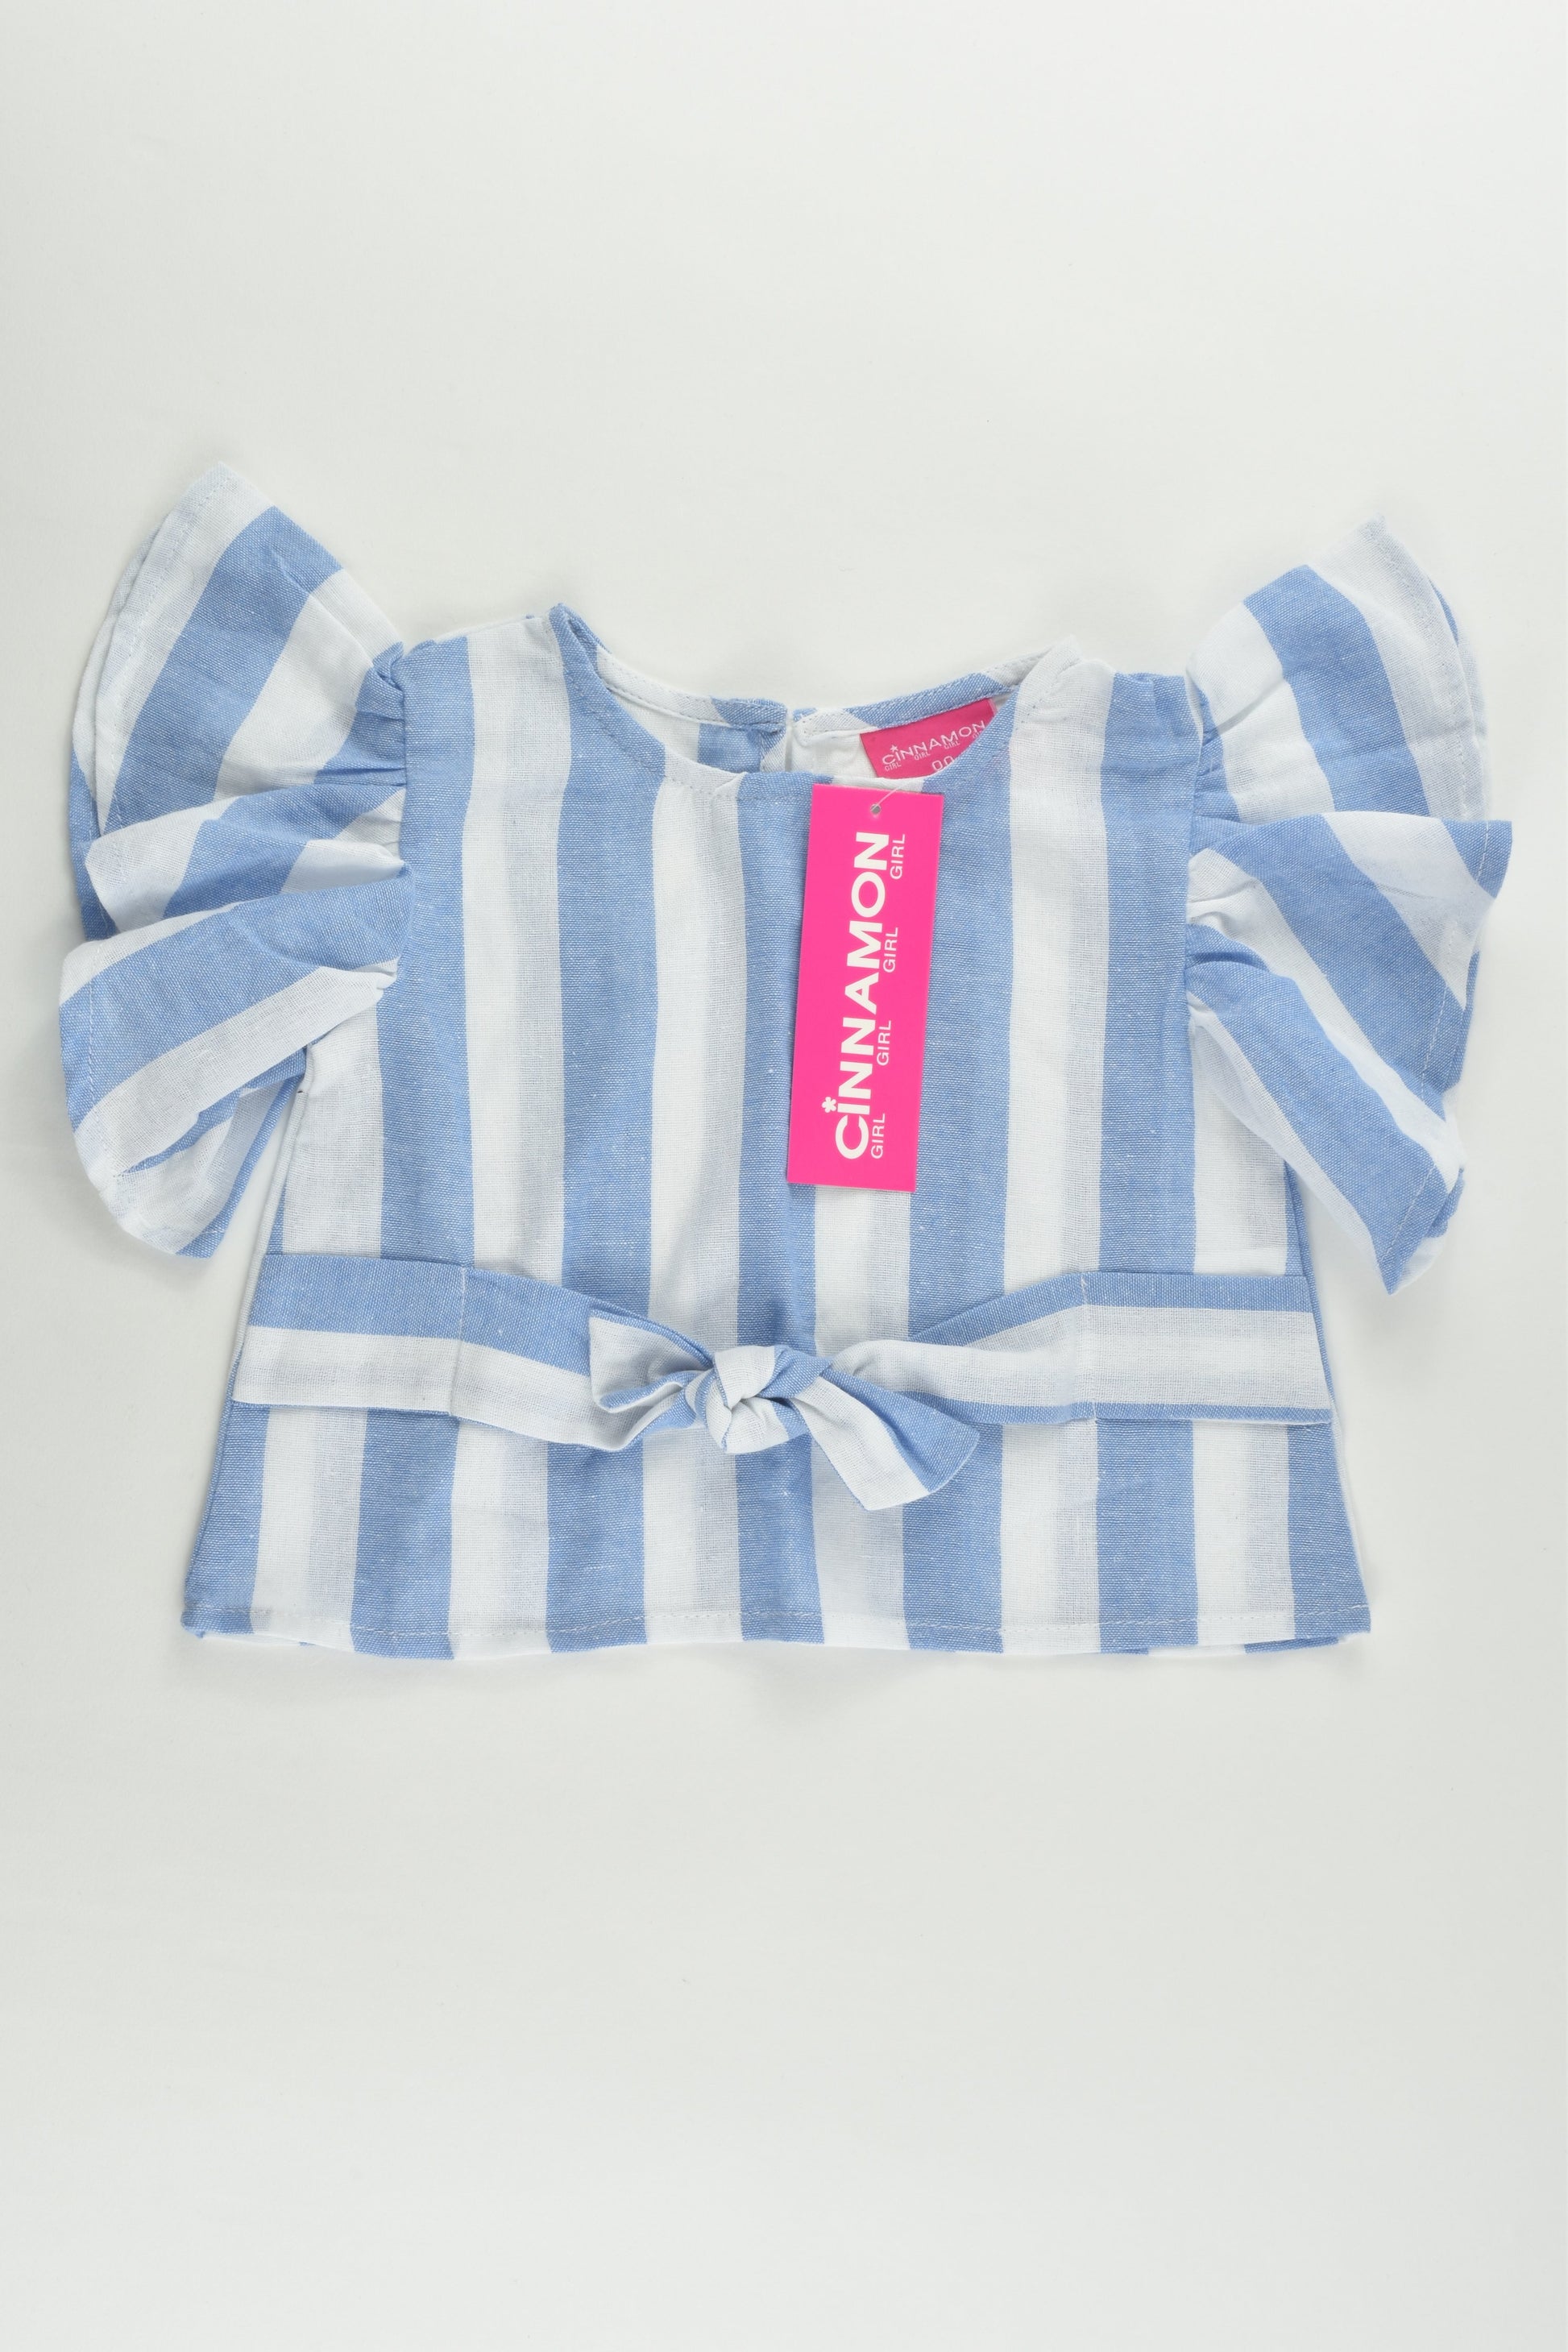 NEW Cinnamon Girl Size 00 Blue Stripes Top